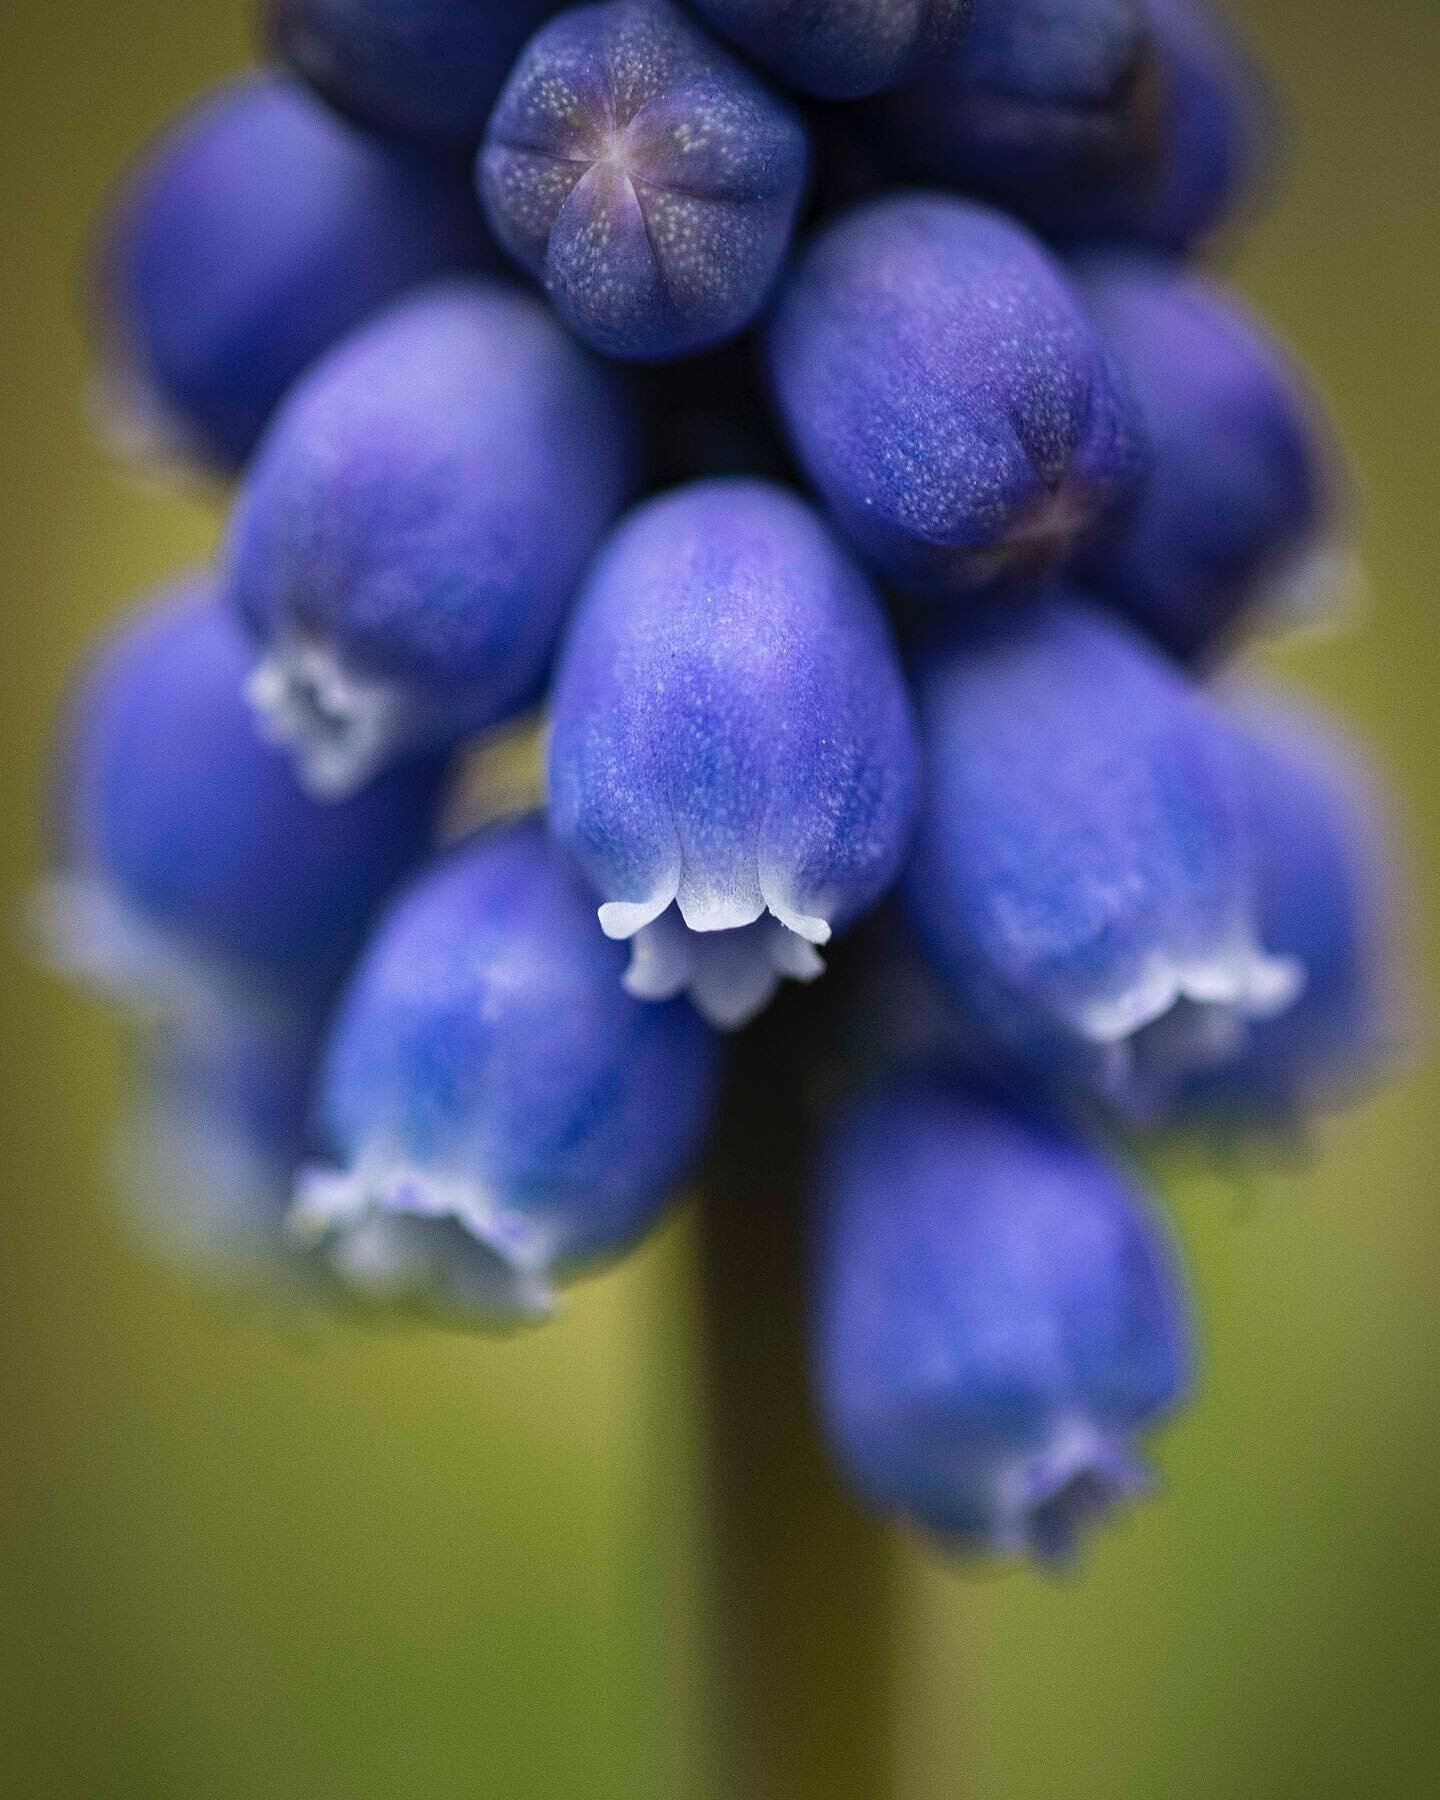 True blue the first signs of spring - a baby grape hyacinth flower detail.
&bull;
#gavinshawcreative.com/gsc-print-shop
&bull;
#Fresh and #delicate #winterflowers #grapehyacinth #londongarden #bulbs #urbangarden - fresh and #wedgewood #wedgewoodblue 